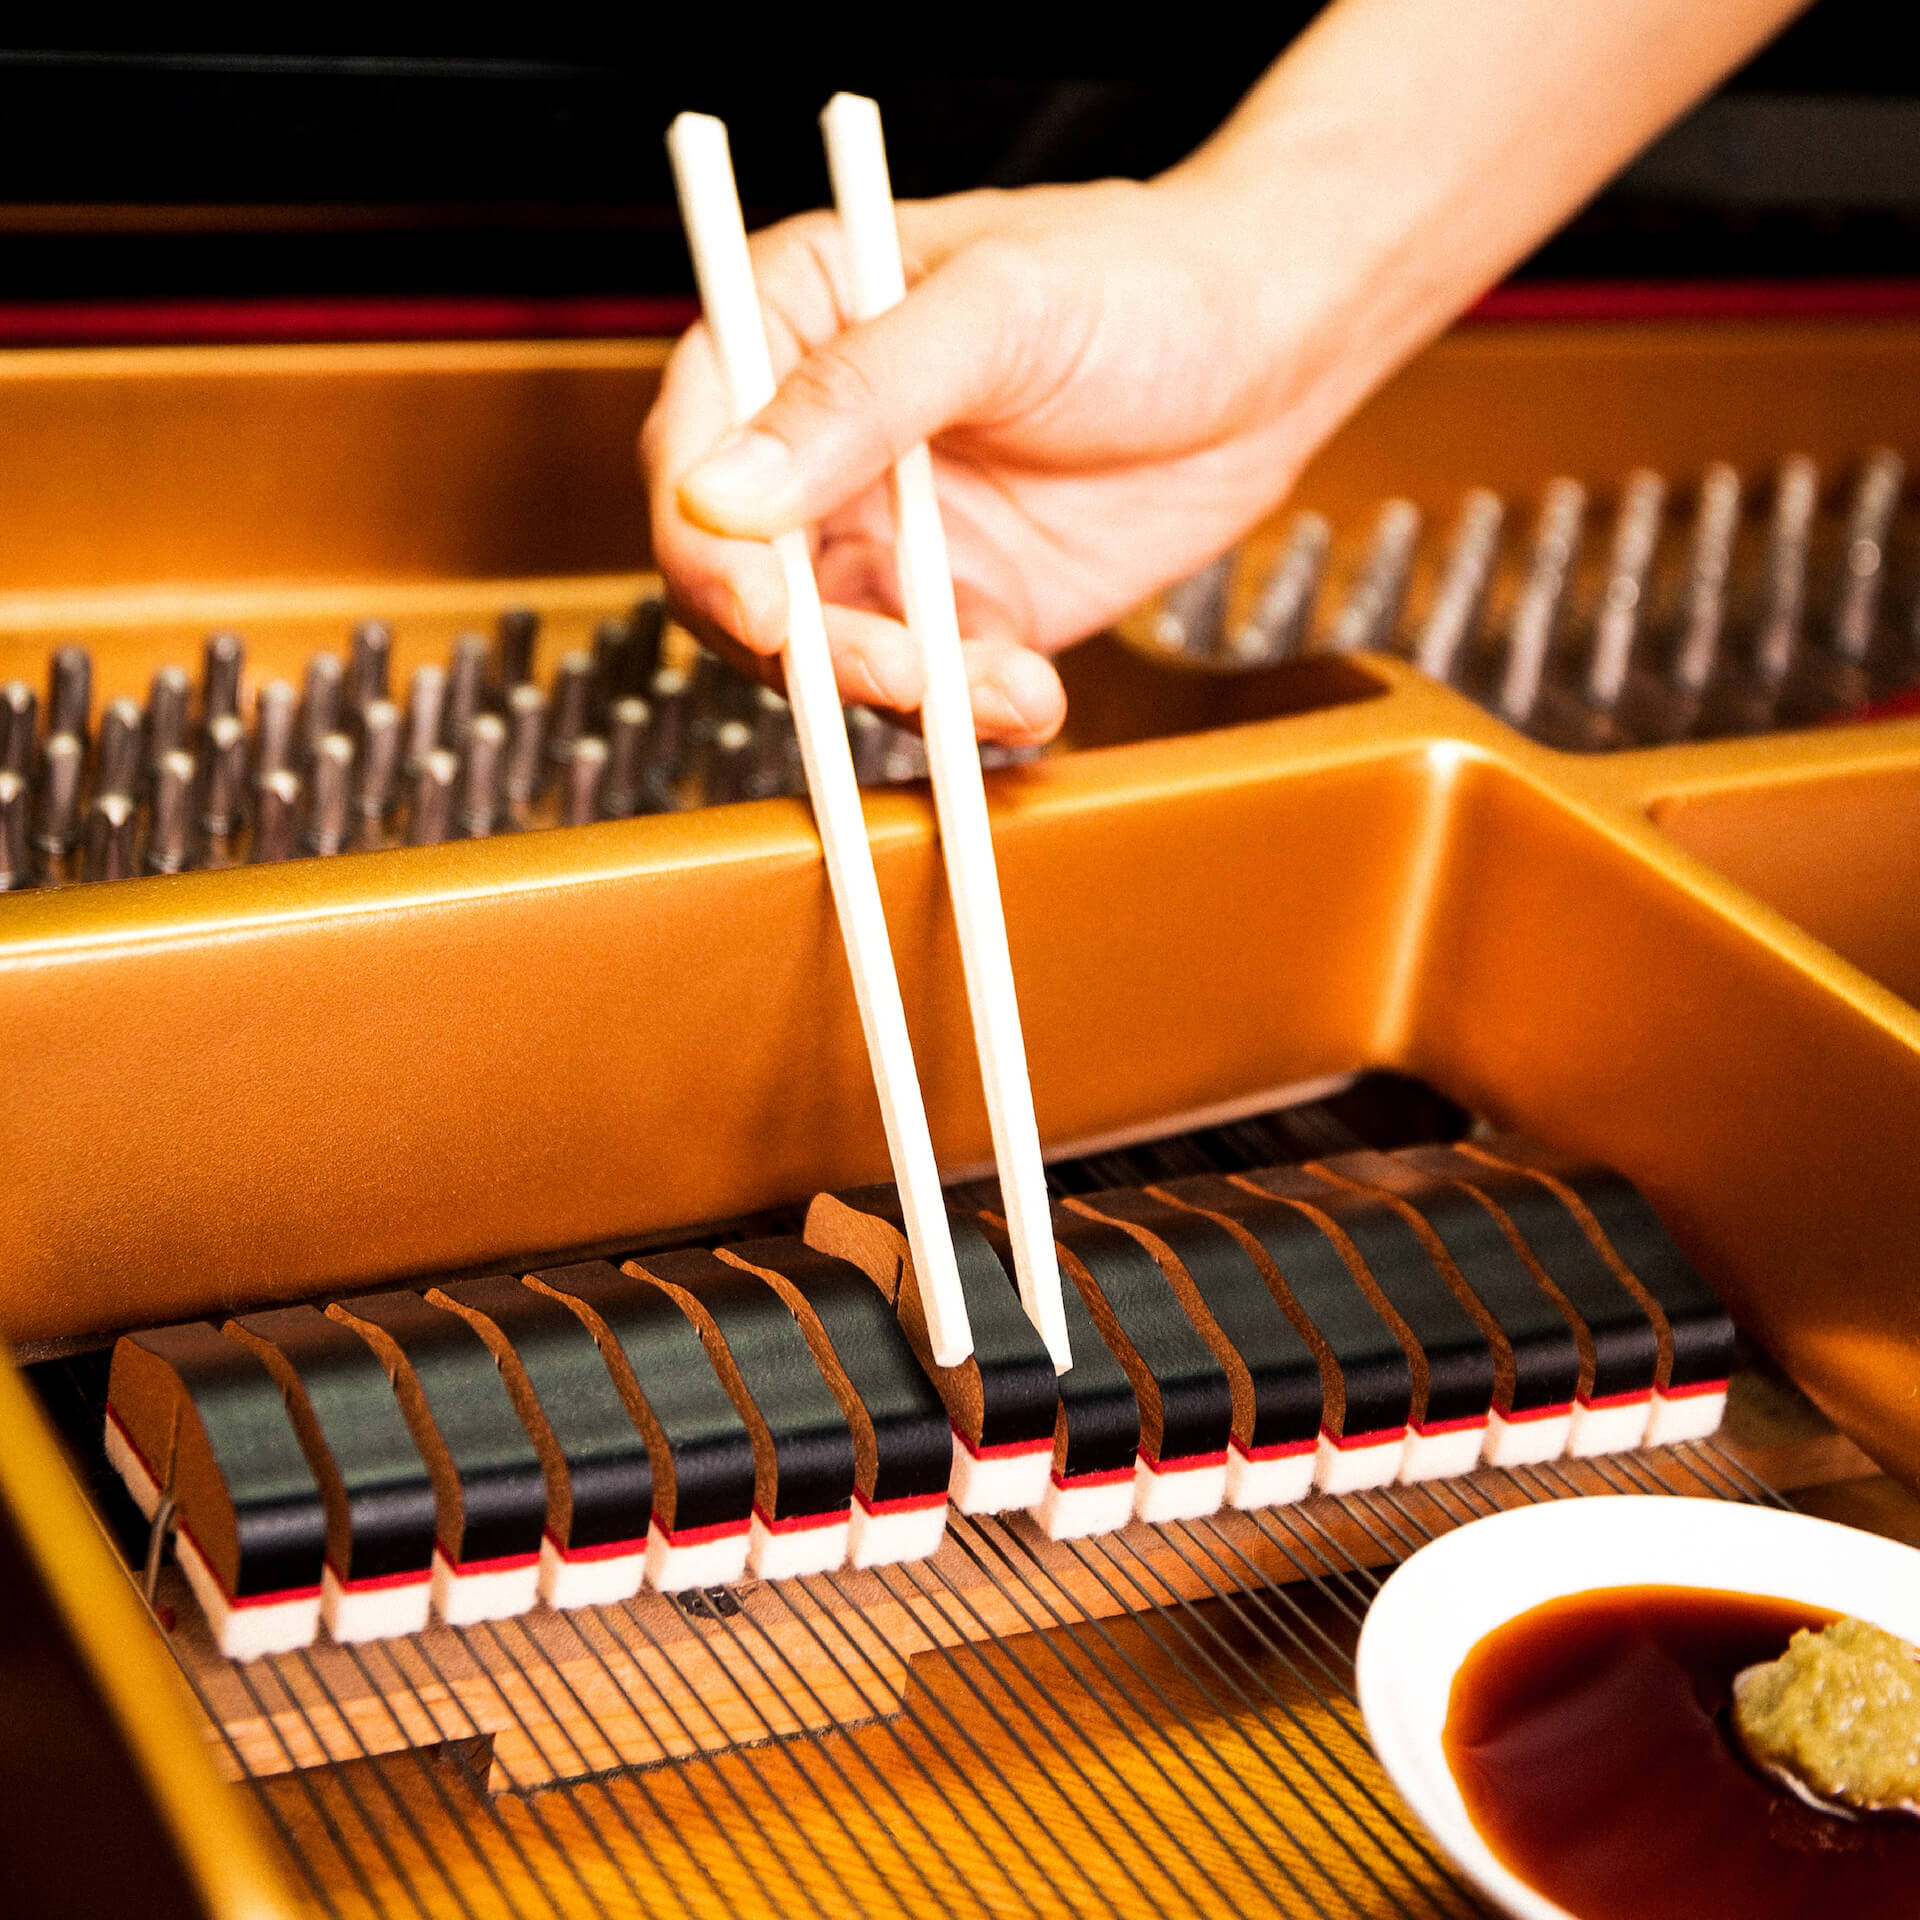 xiangyu、ピアノダンパーとしめ鯖が似ていることを歌った「ピアノダンパー激似しめ鯖」を本日デジタルリリース！ 191025_music_xiangyu02